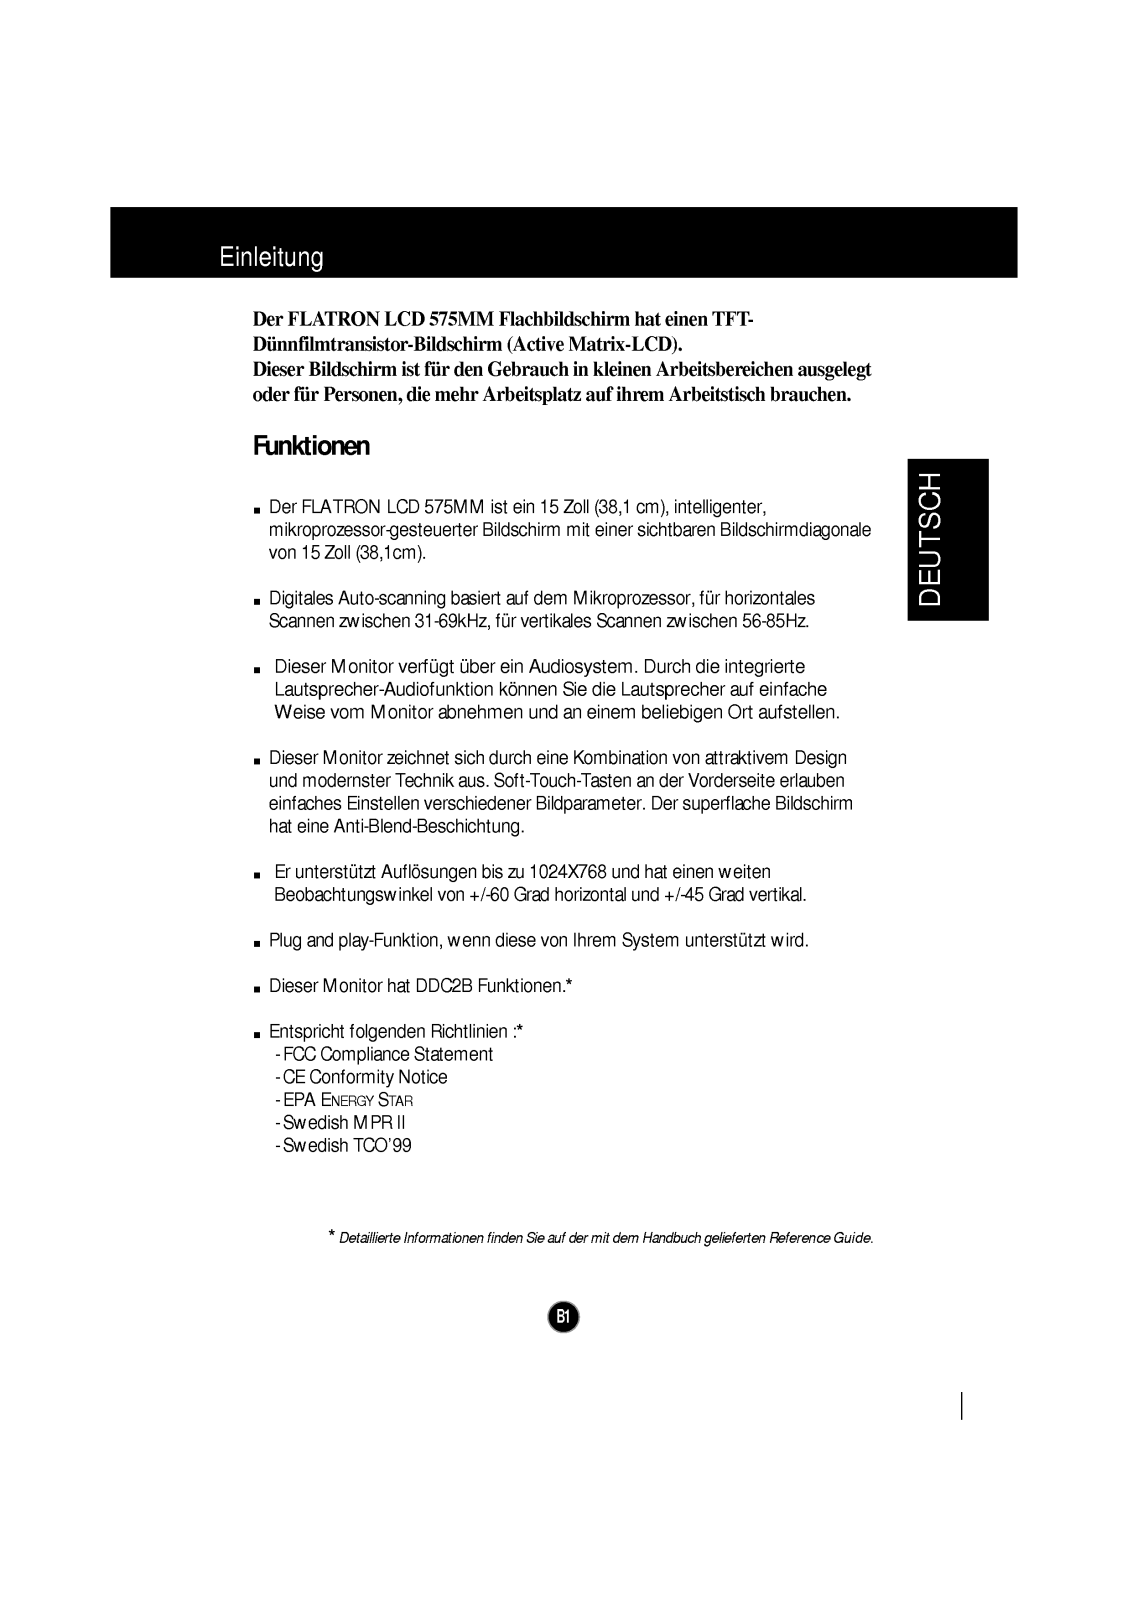 Lg FLATRON LCD 575MM Instructions manual